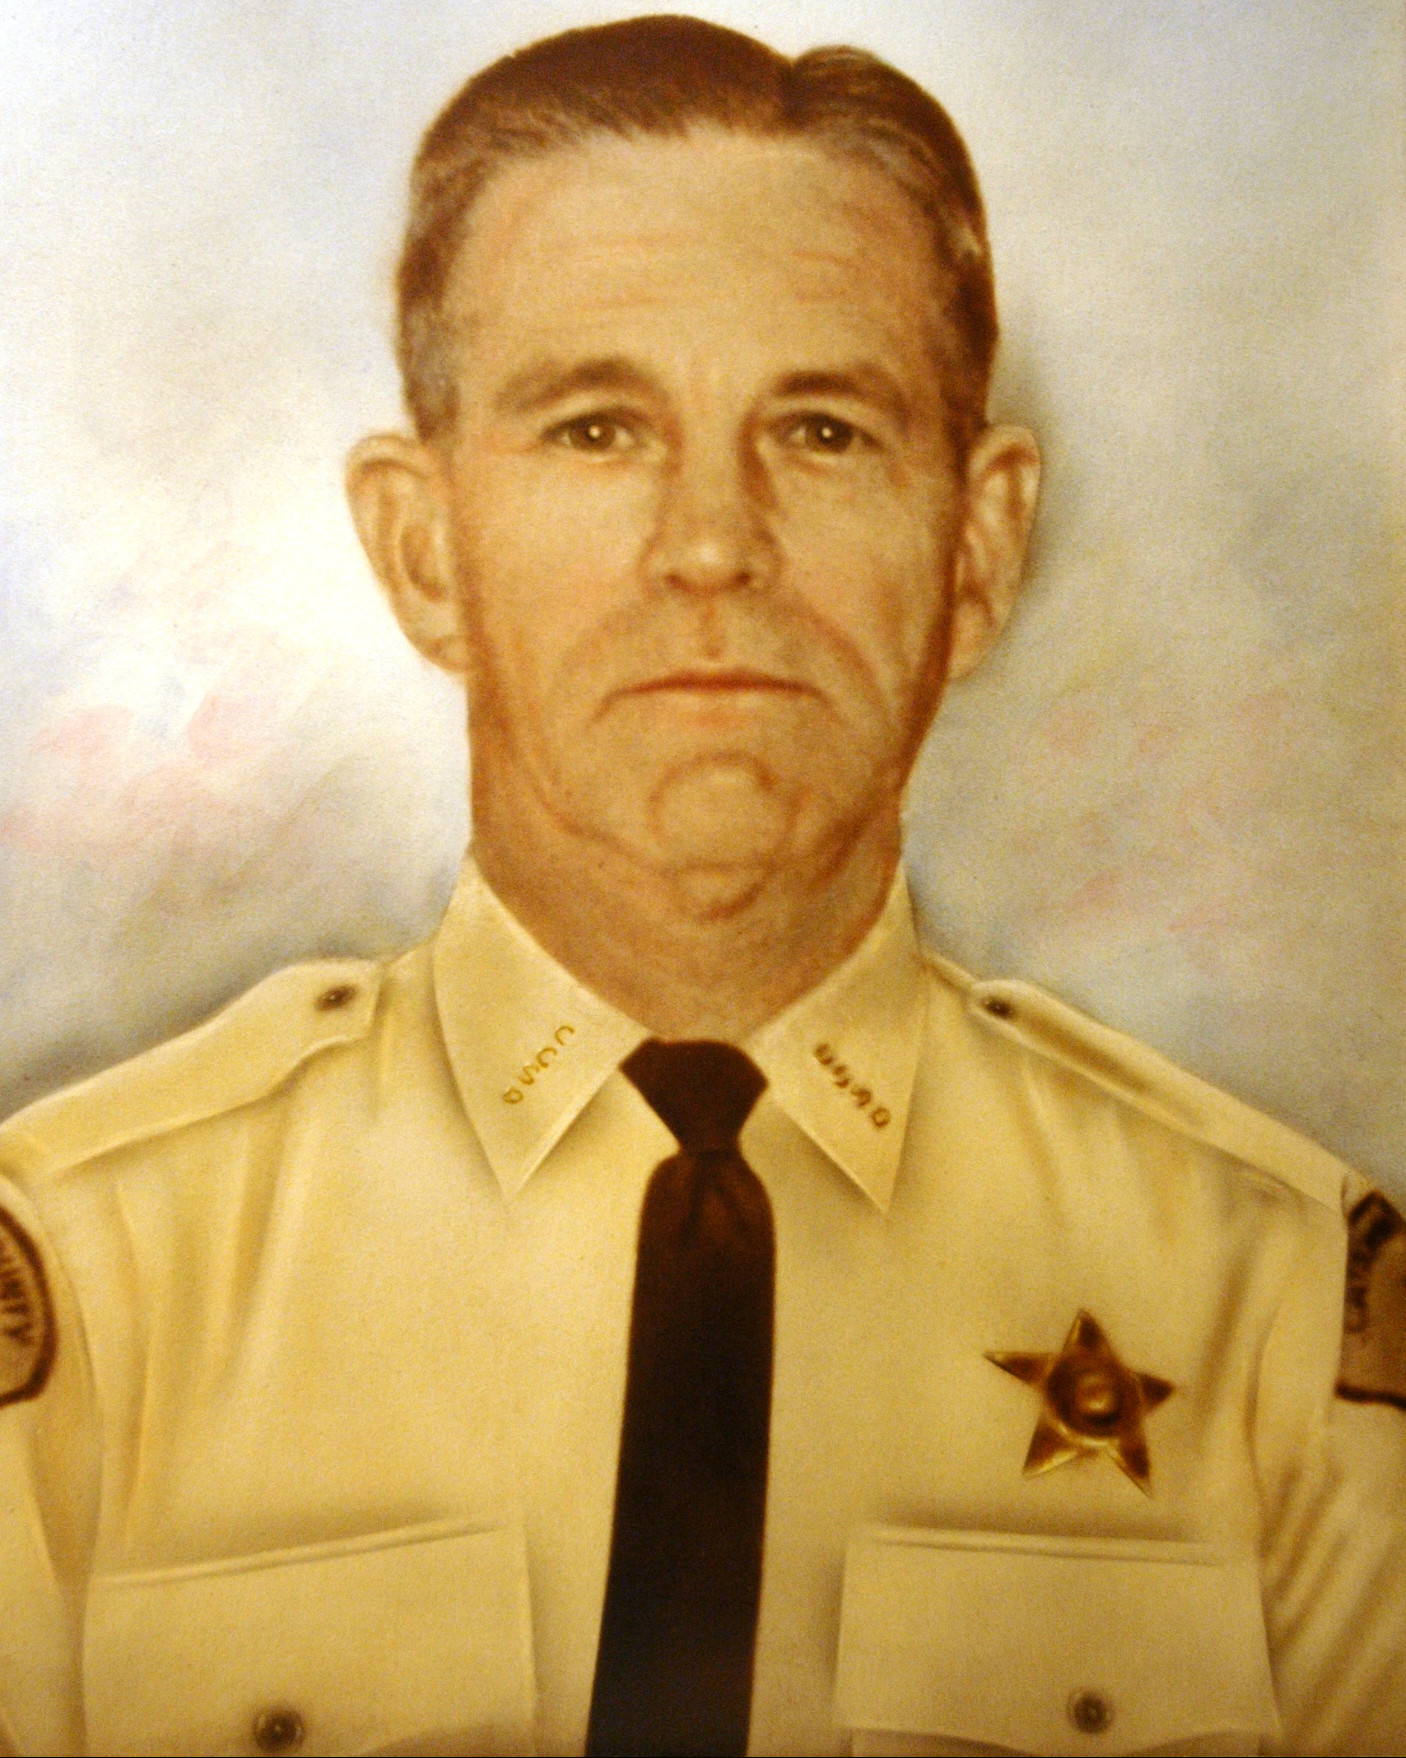 Deputy Sheriff John O. Yount | Catawba County Sheriff's Office, North Carolina